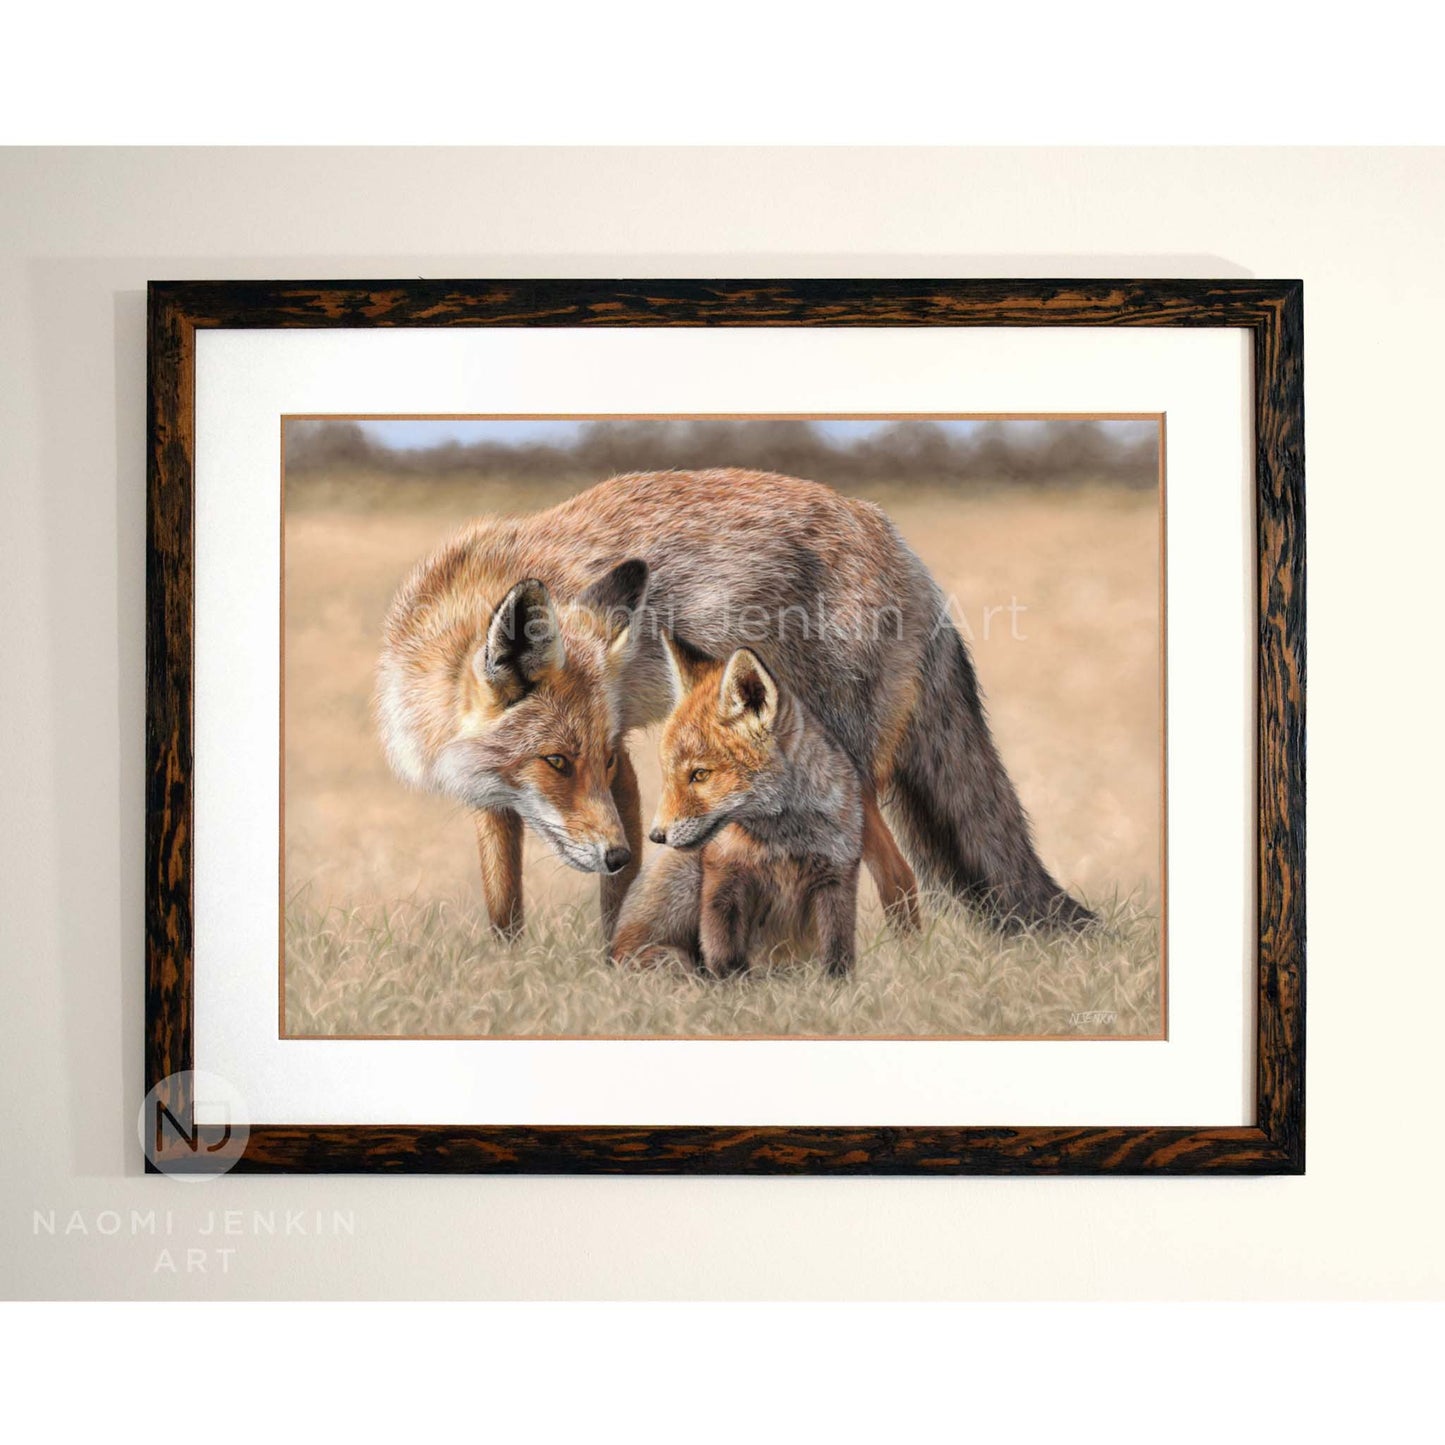 Framed original fox painting 'Heart to Heart' by wildlife artist Naomi Jenkin